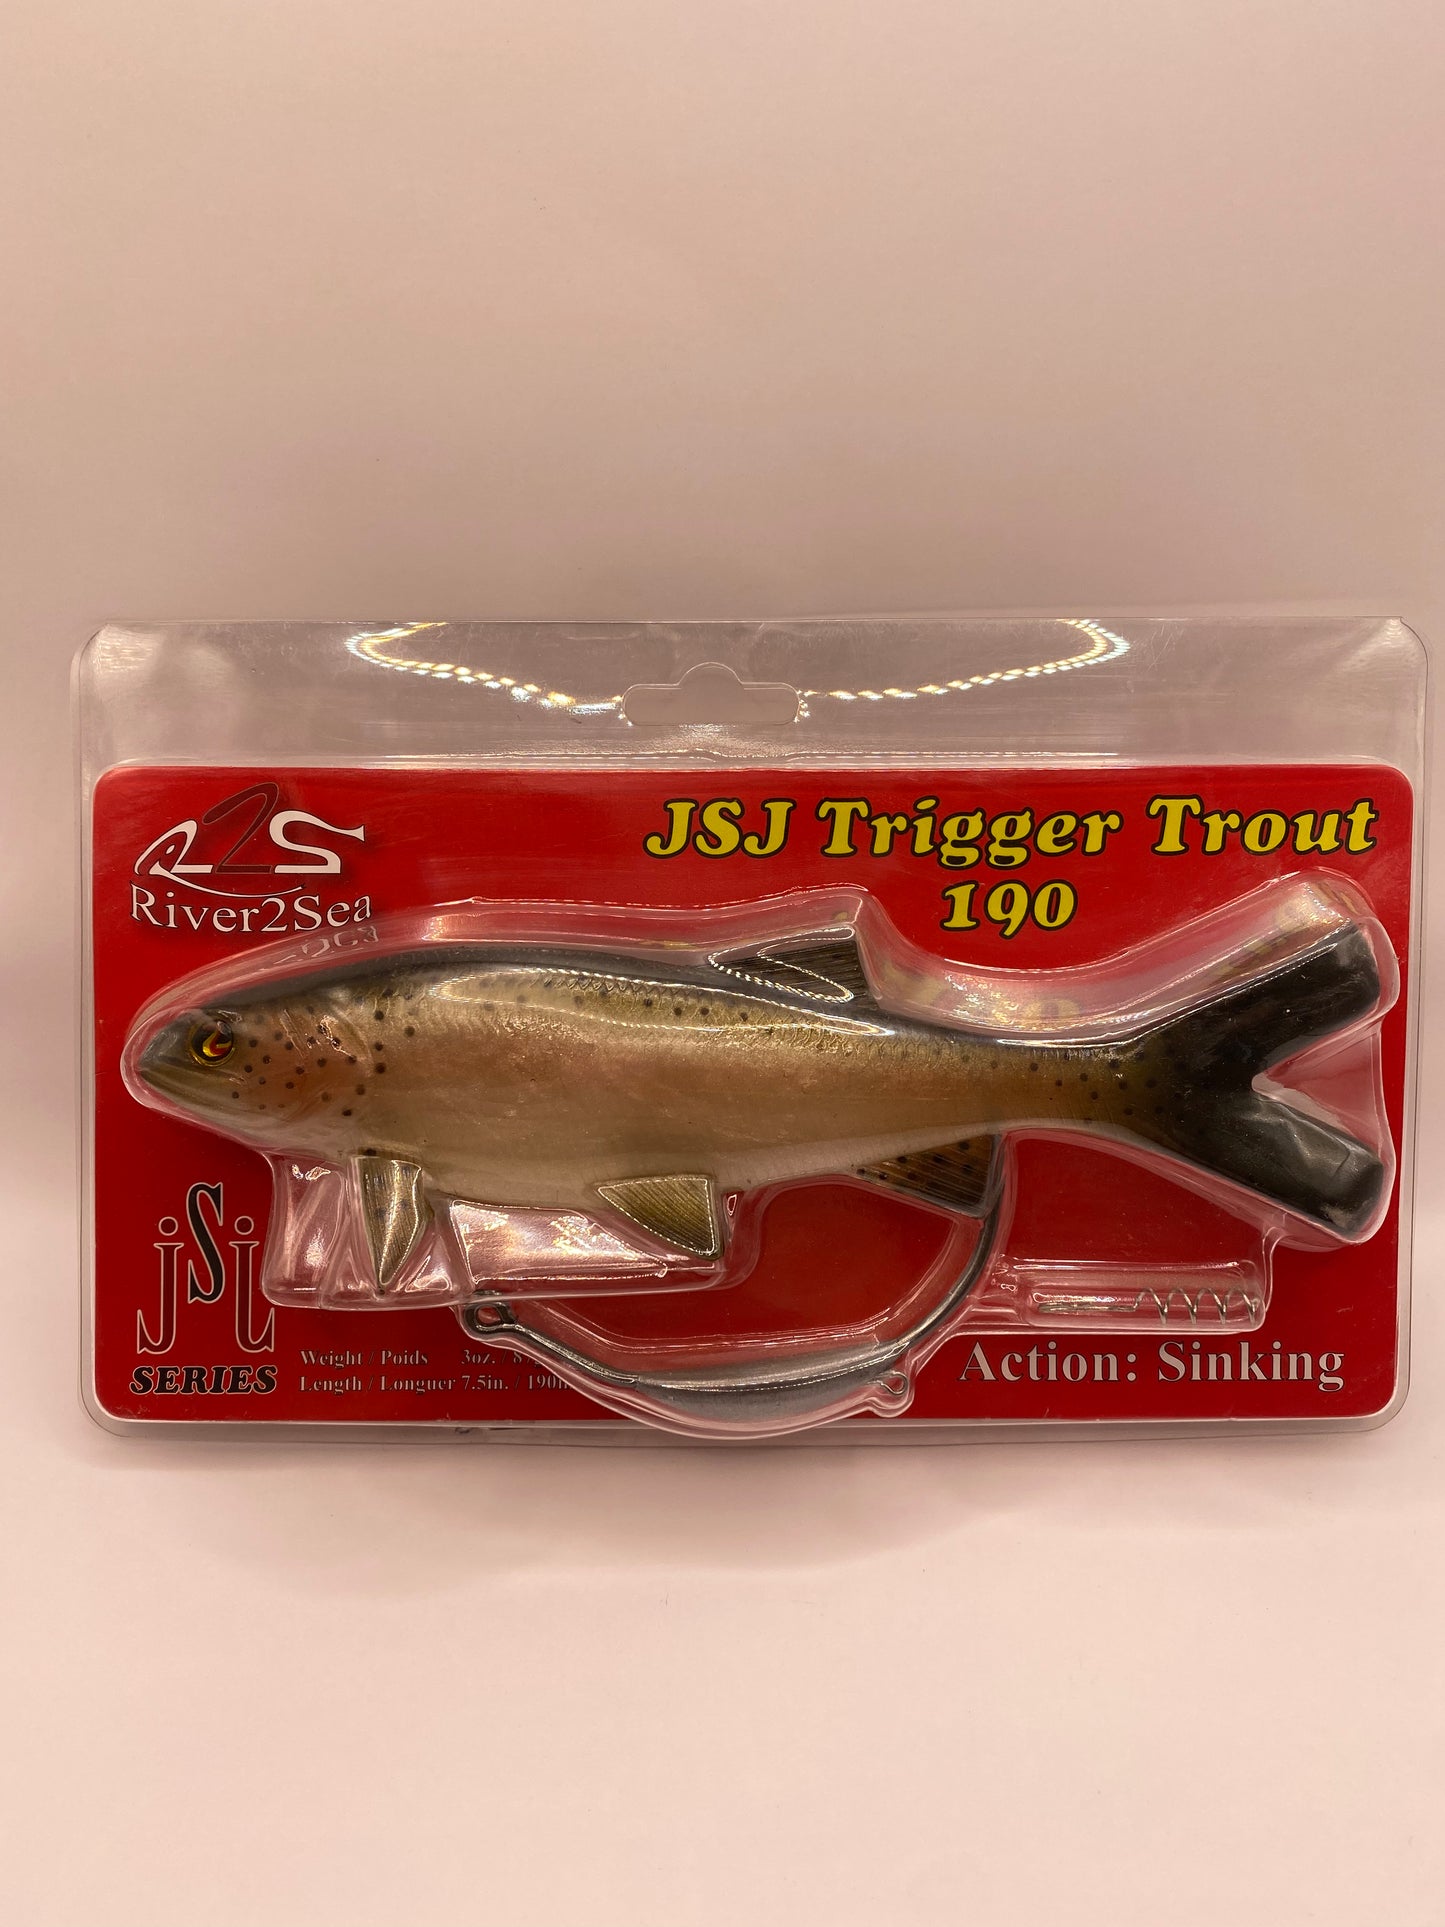 River2Sea JSJ Trigger Trout 190